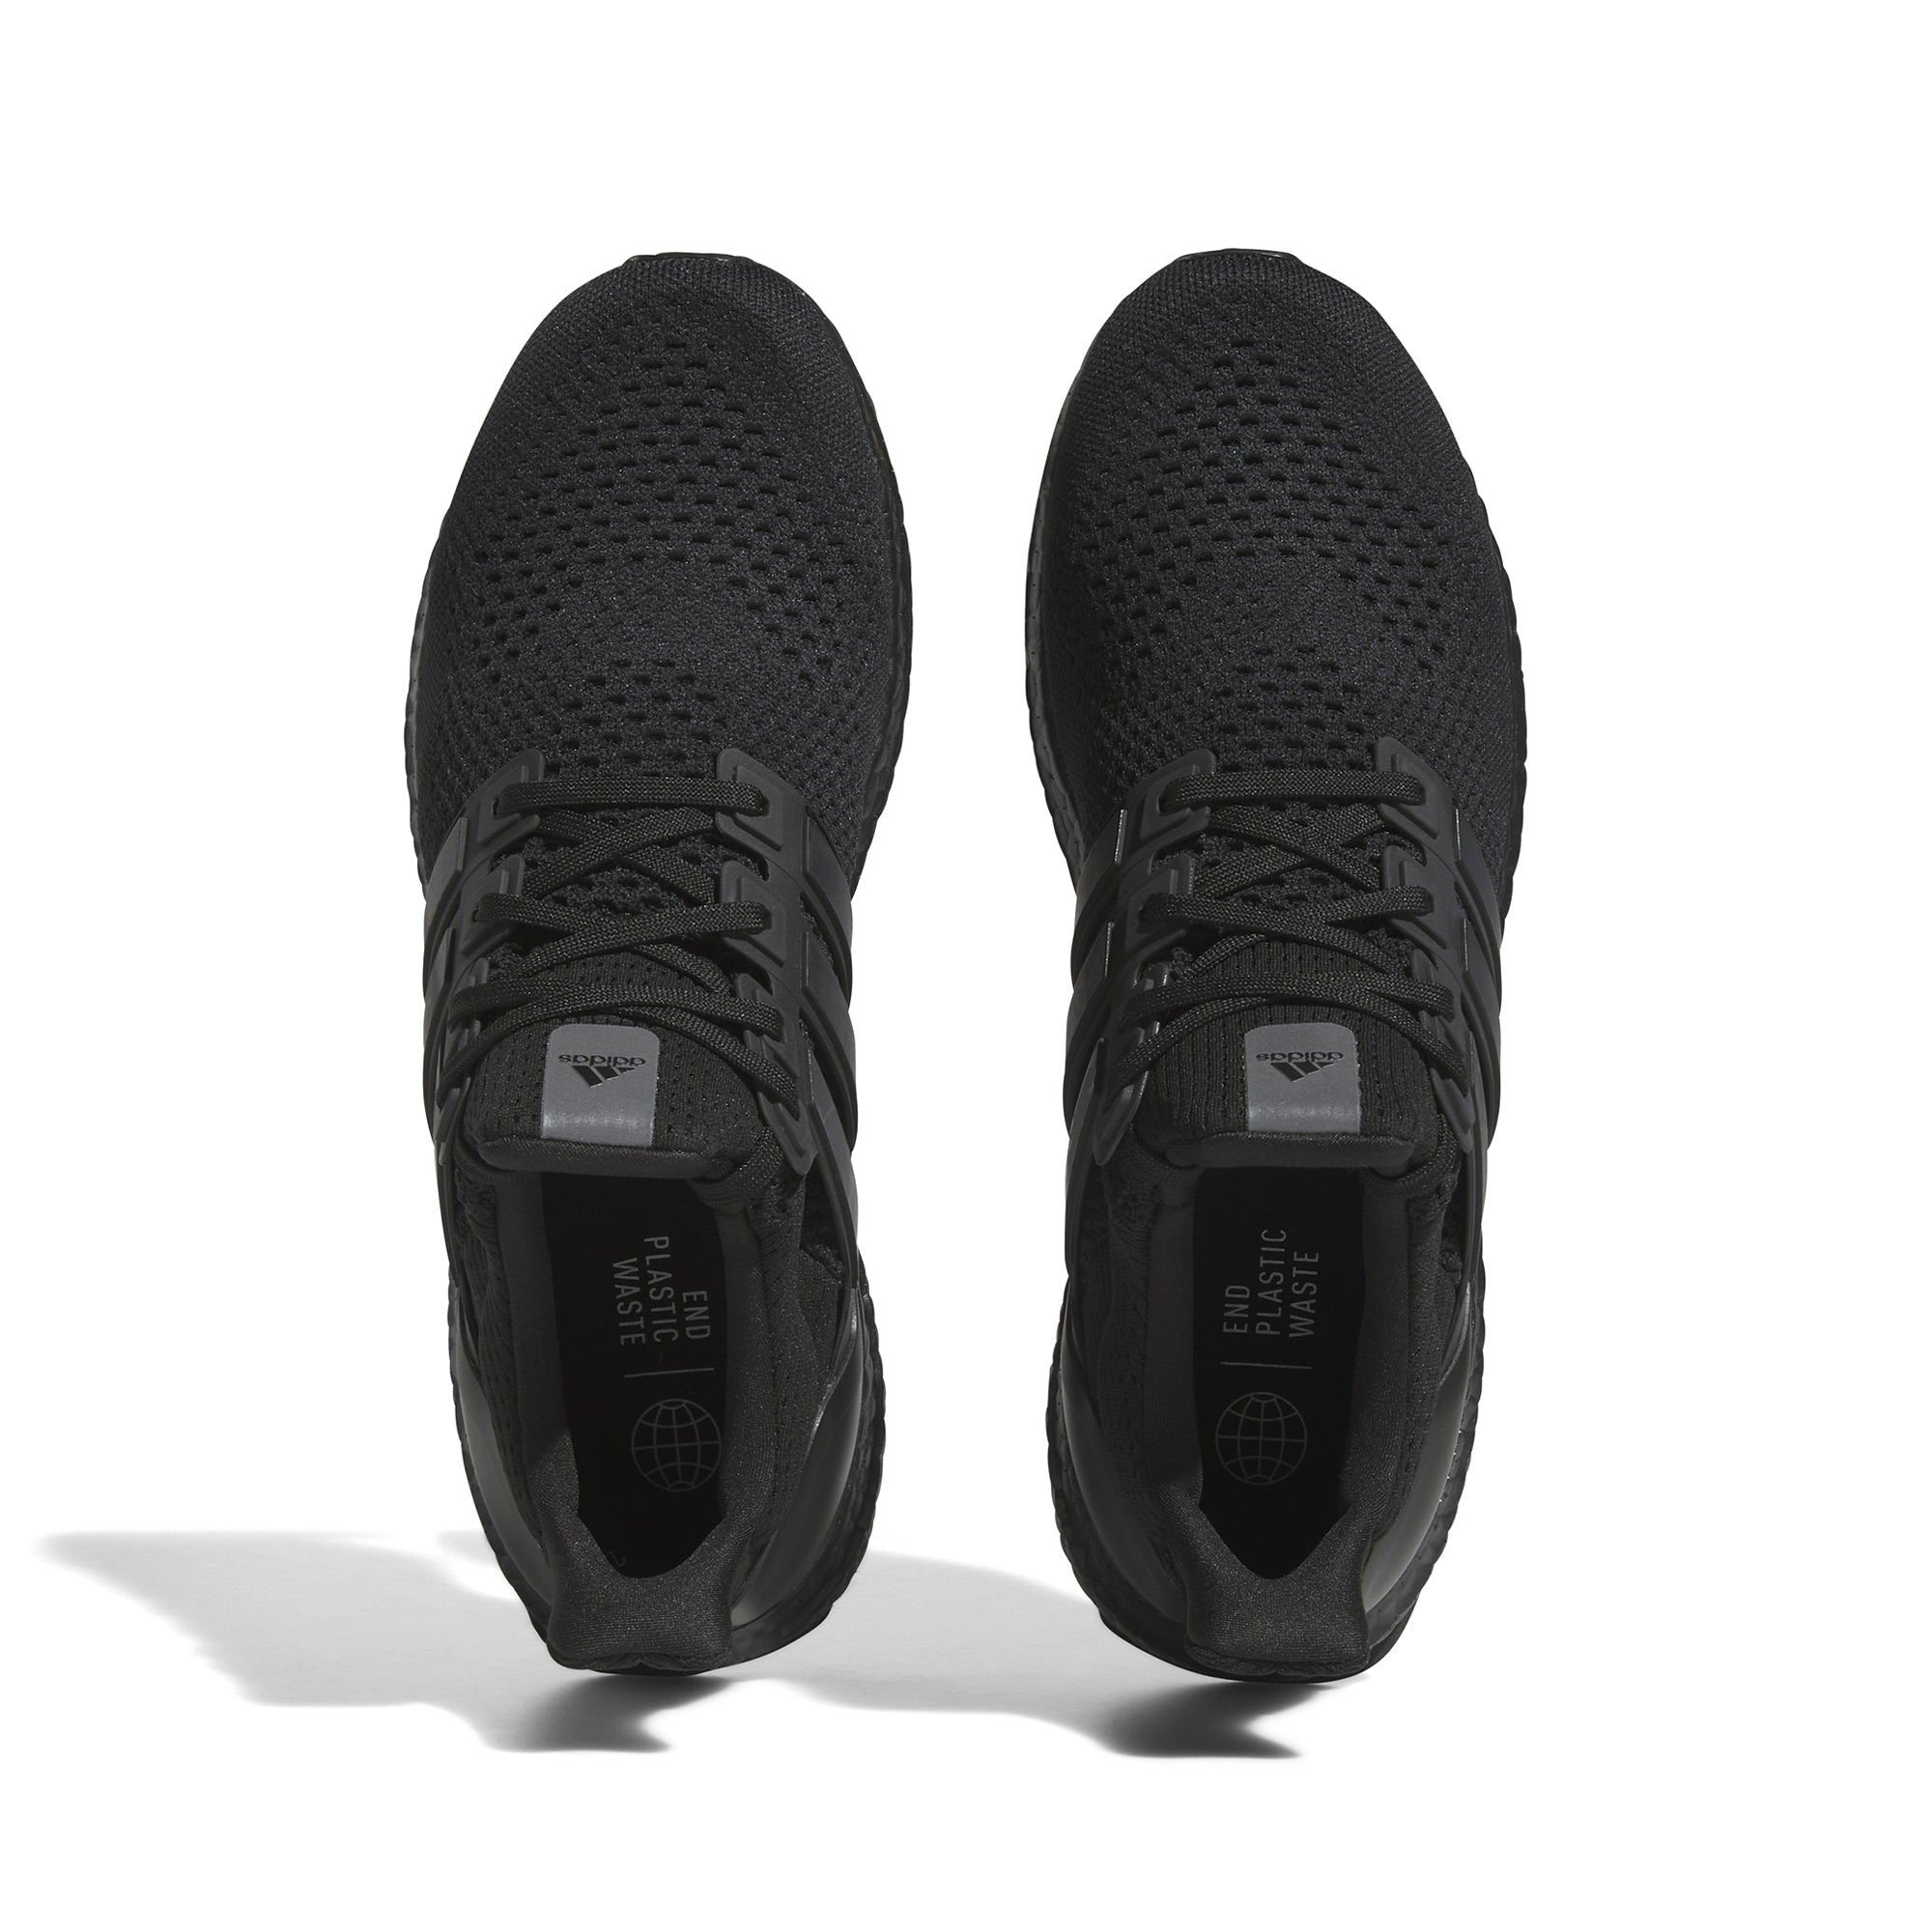 Adidas Ultraboost 1.0 Shoes - Black - 8.5